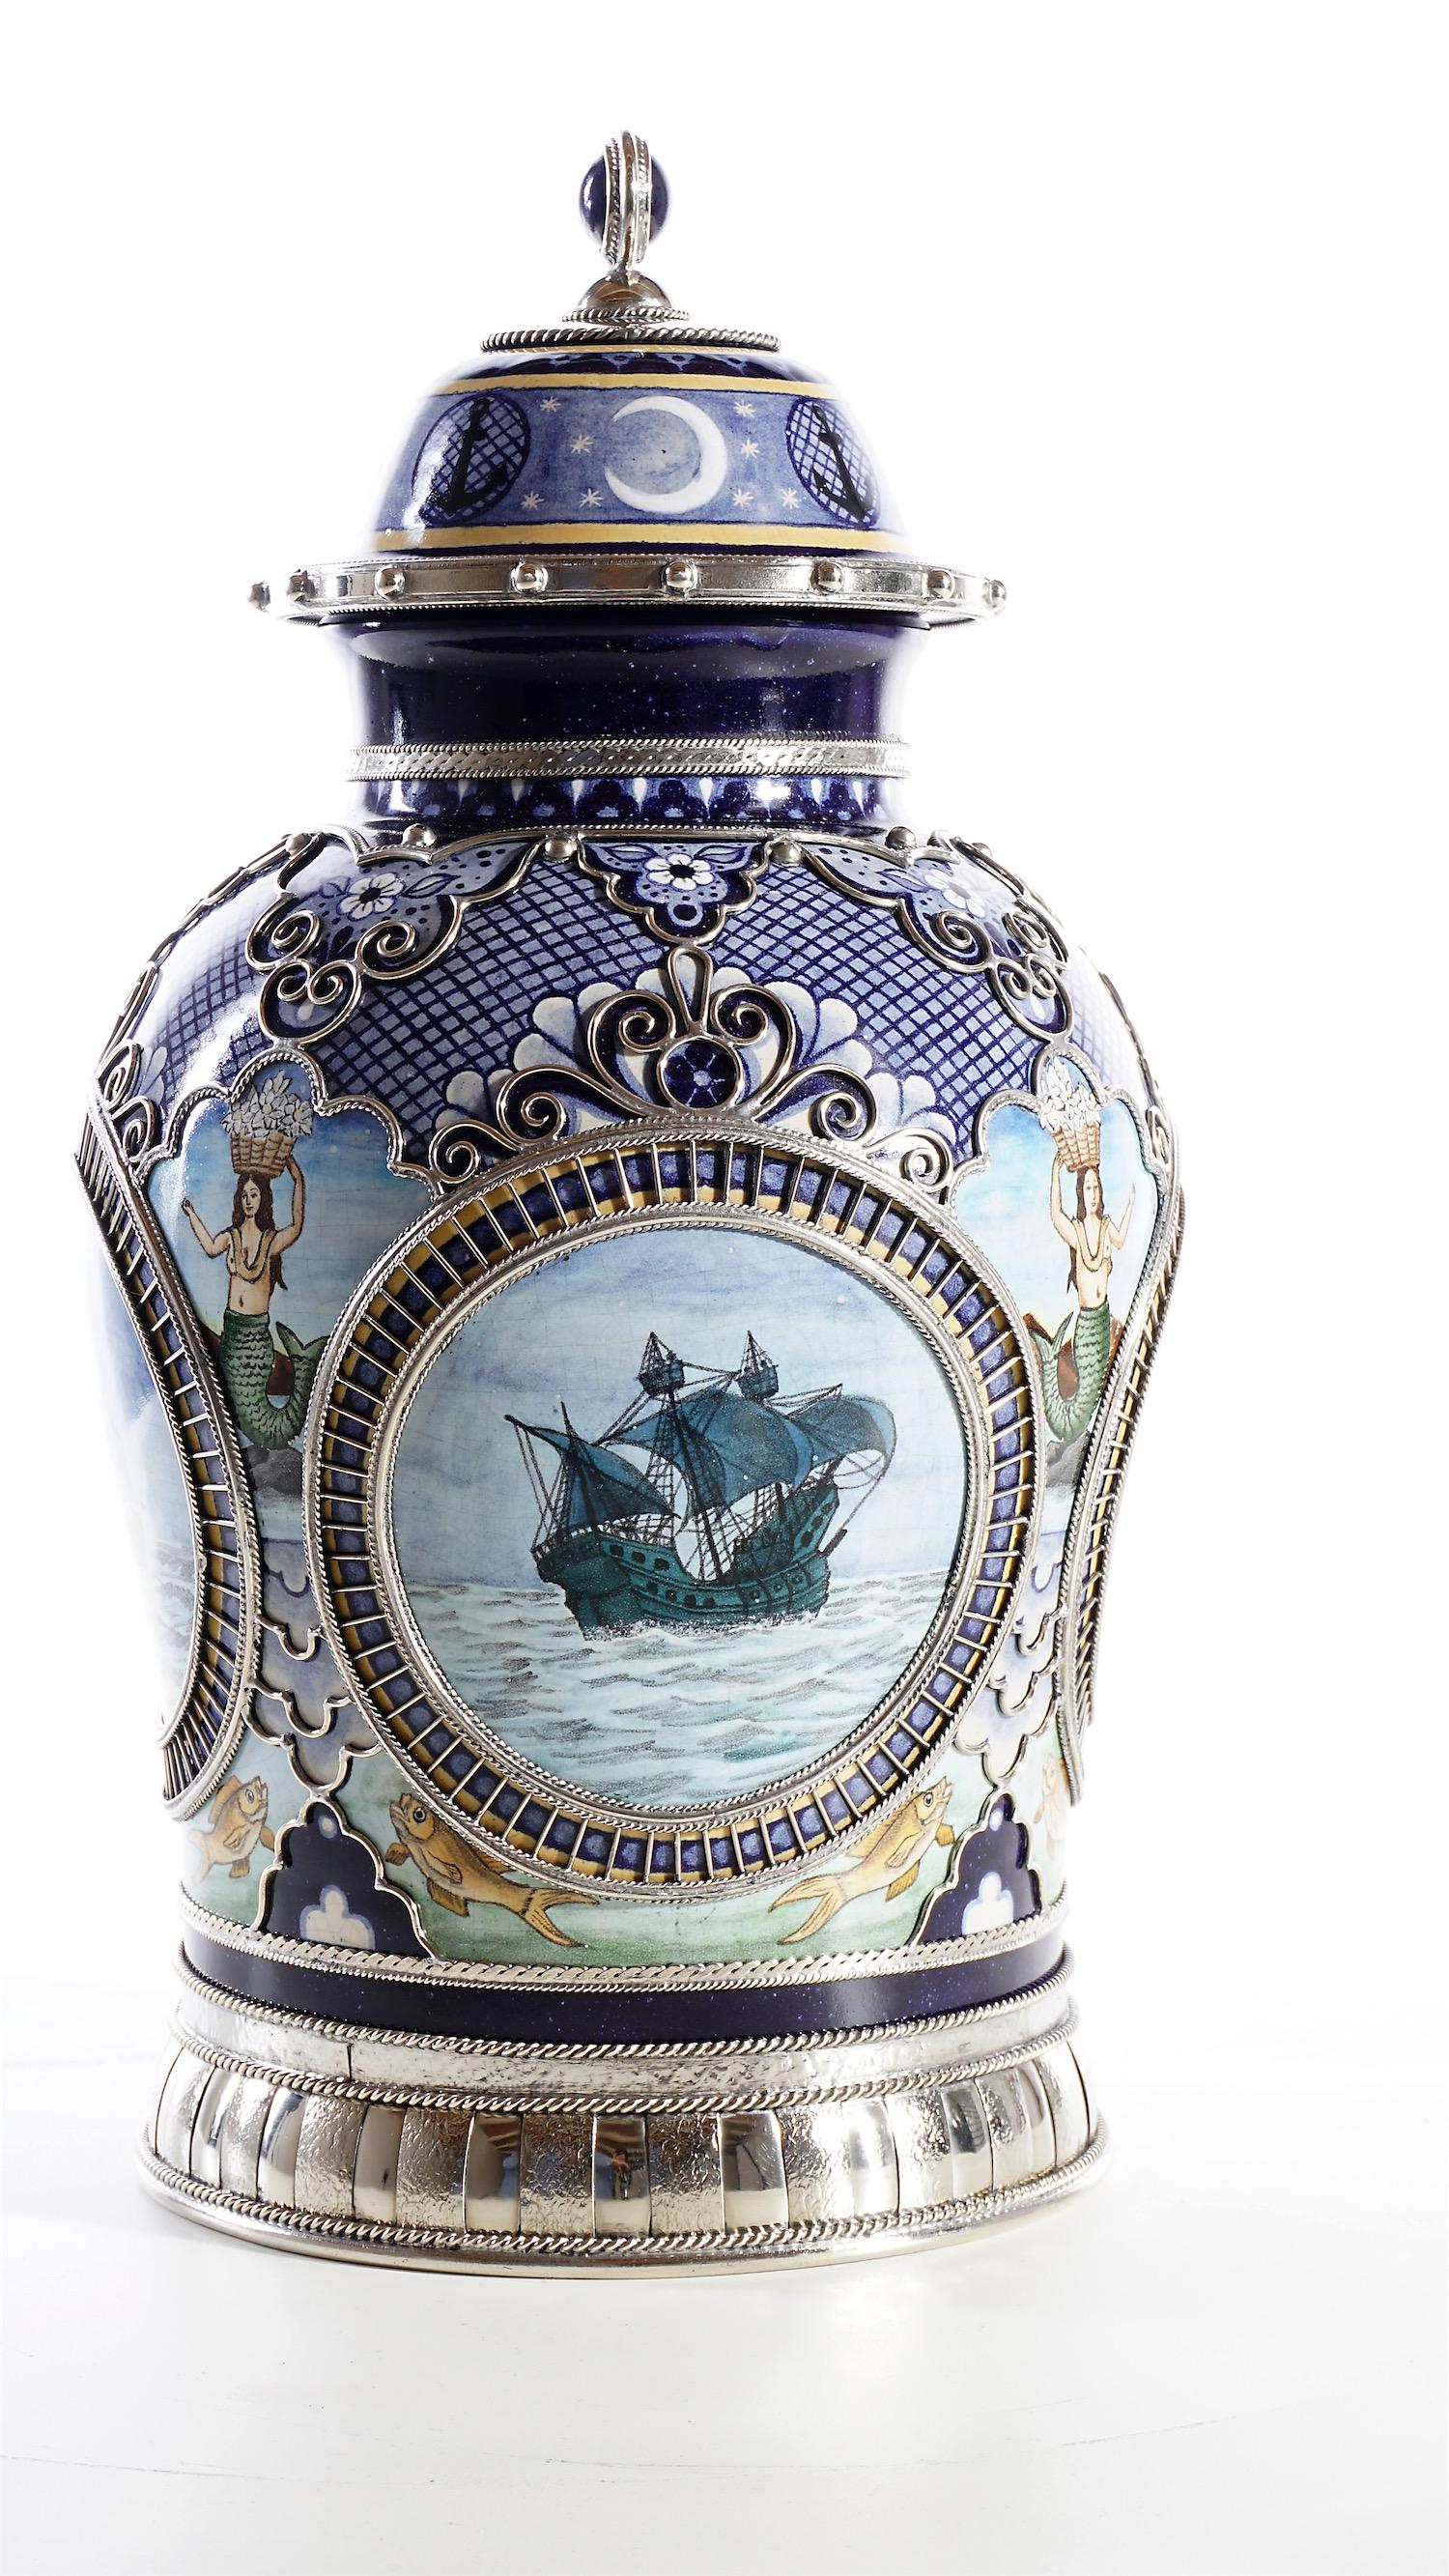 Glazed Ceramic and White Metal 'Alpaca' Jar with Hand Painted Galeons, Mermaids